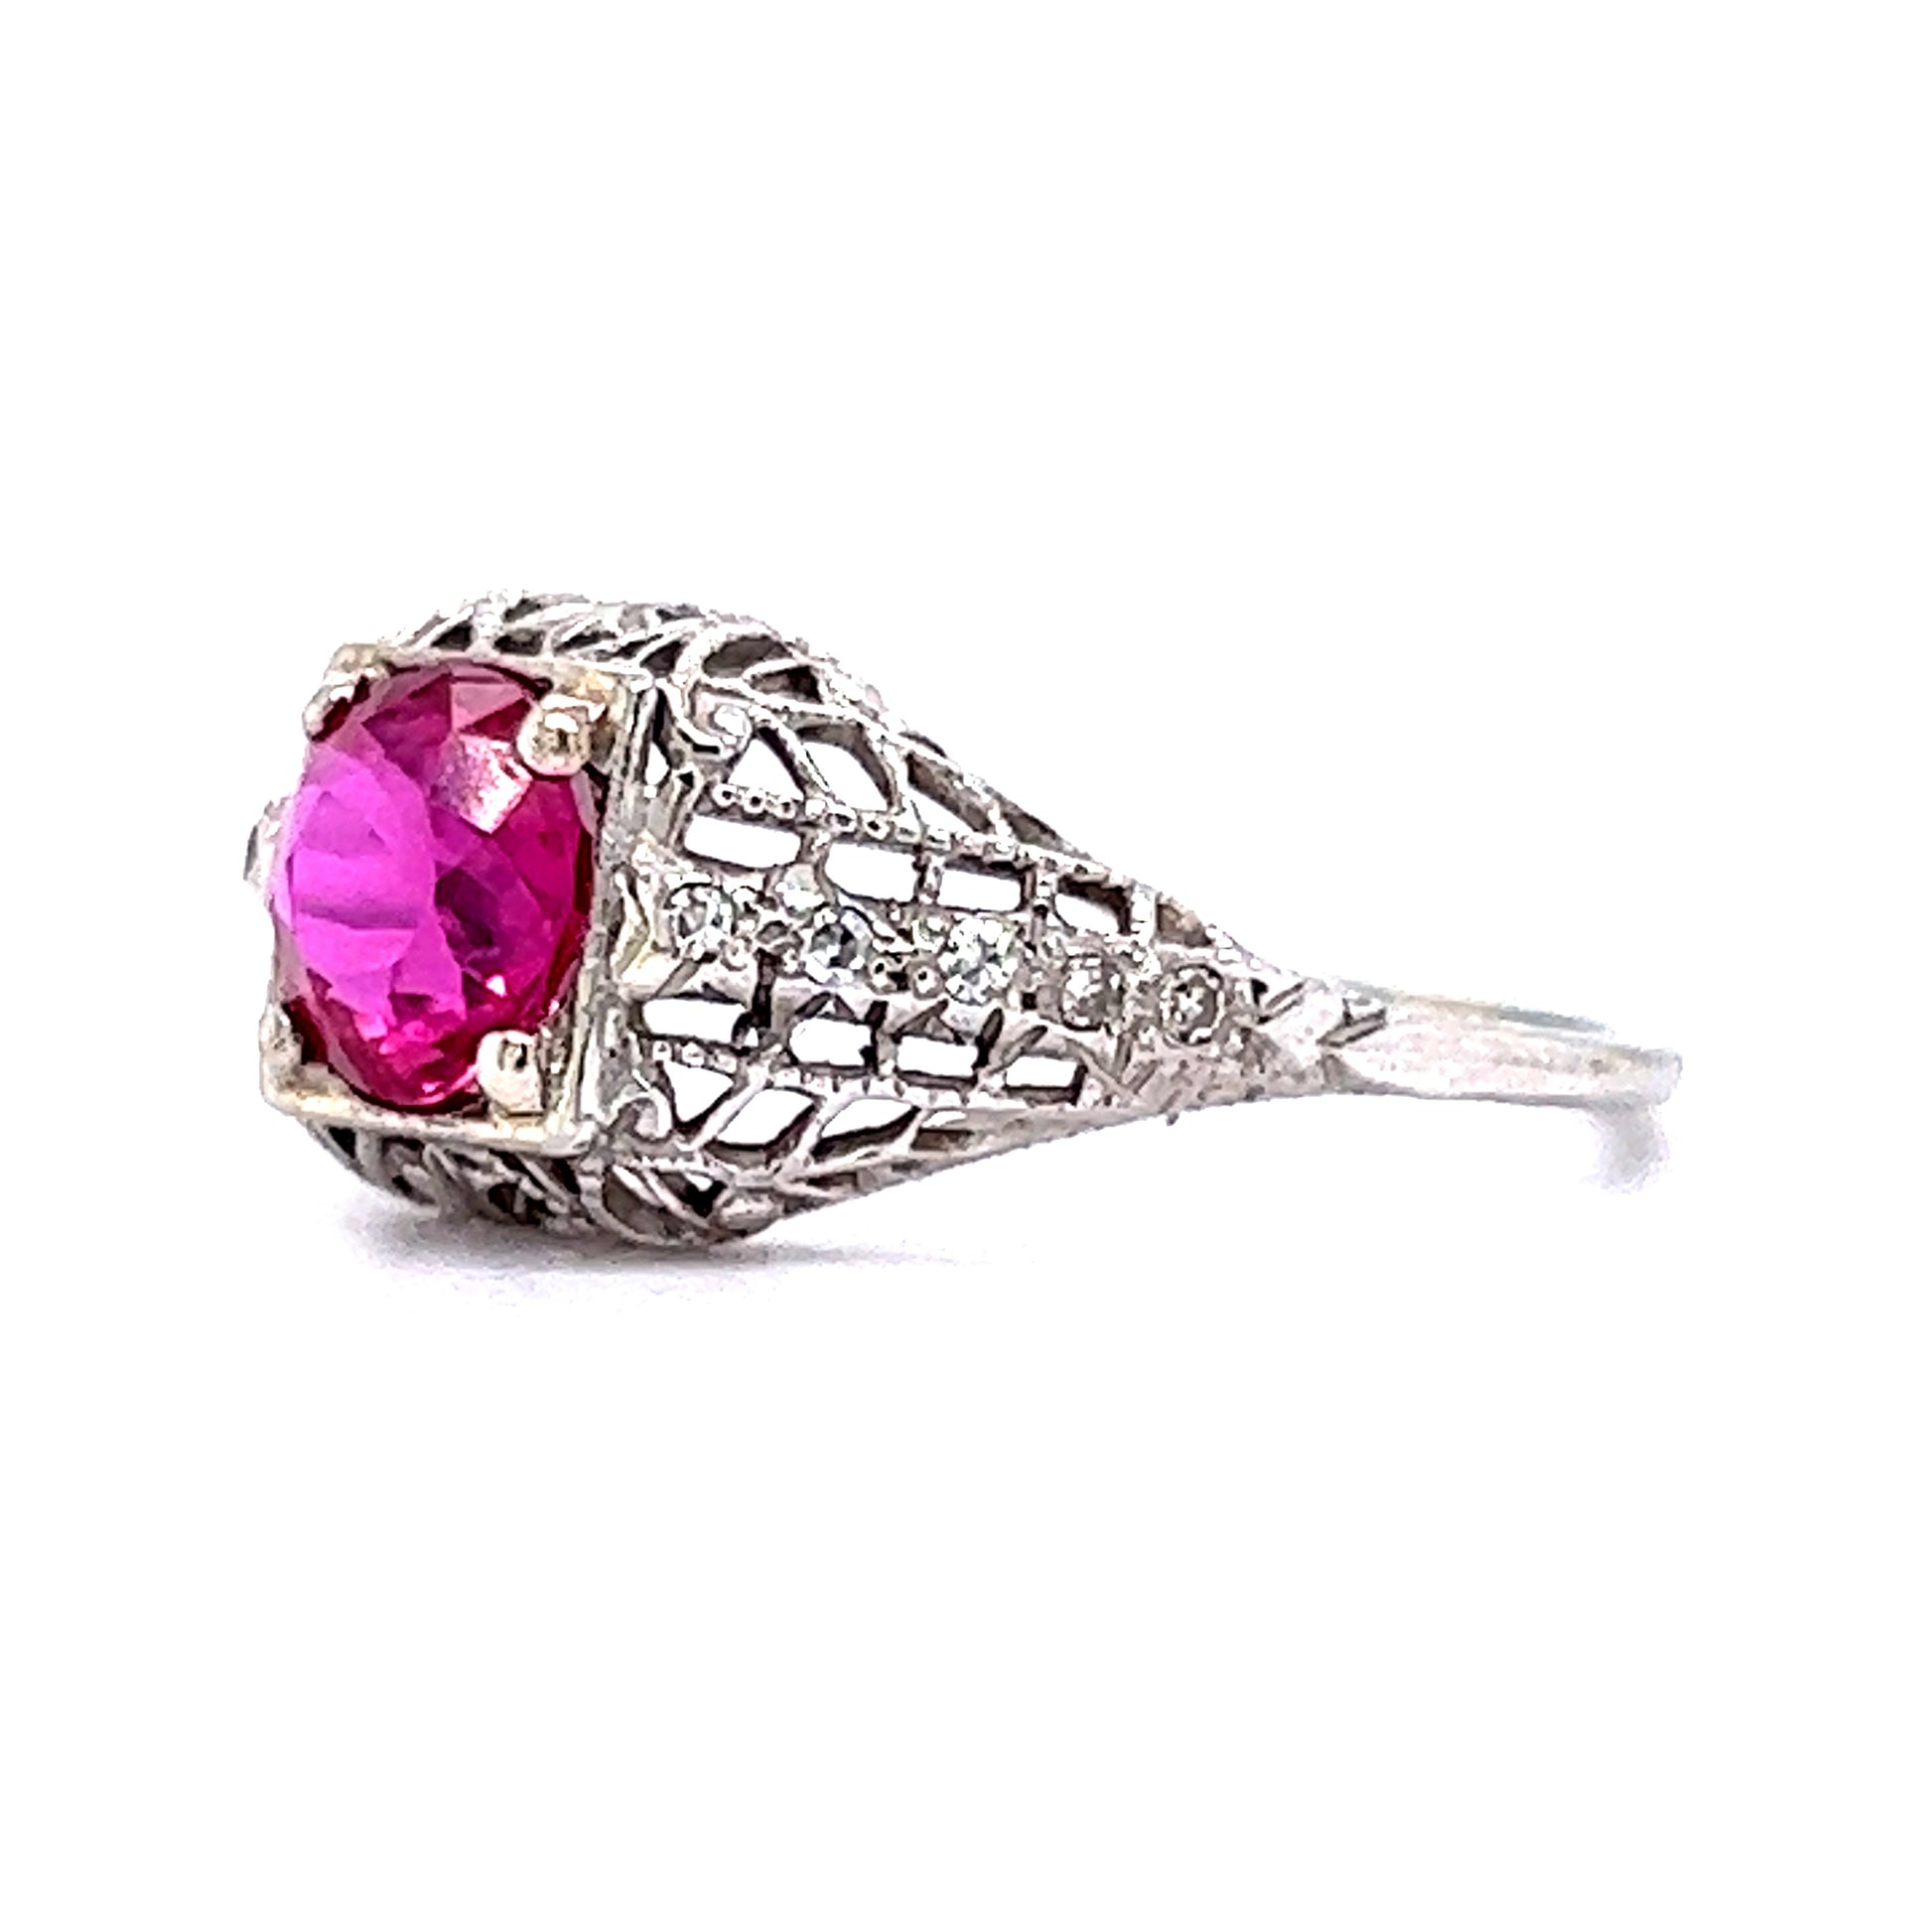 Fantine - 25.00 Carat Pink Sapphire Ring with 1.00 Carat Natural Diamonds 14K Gold